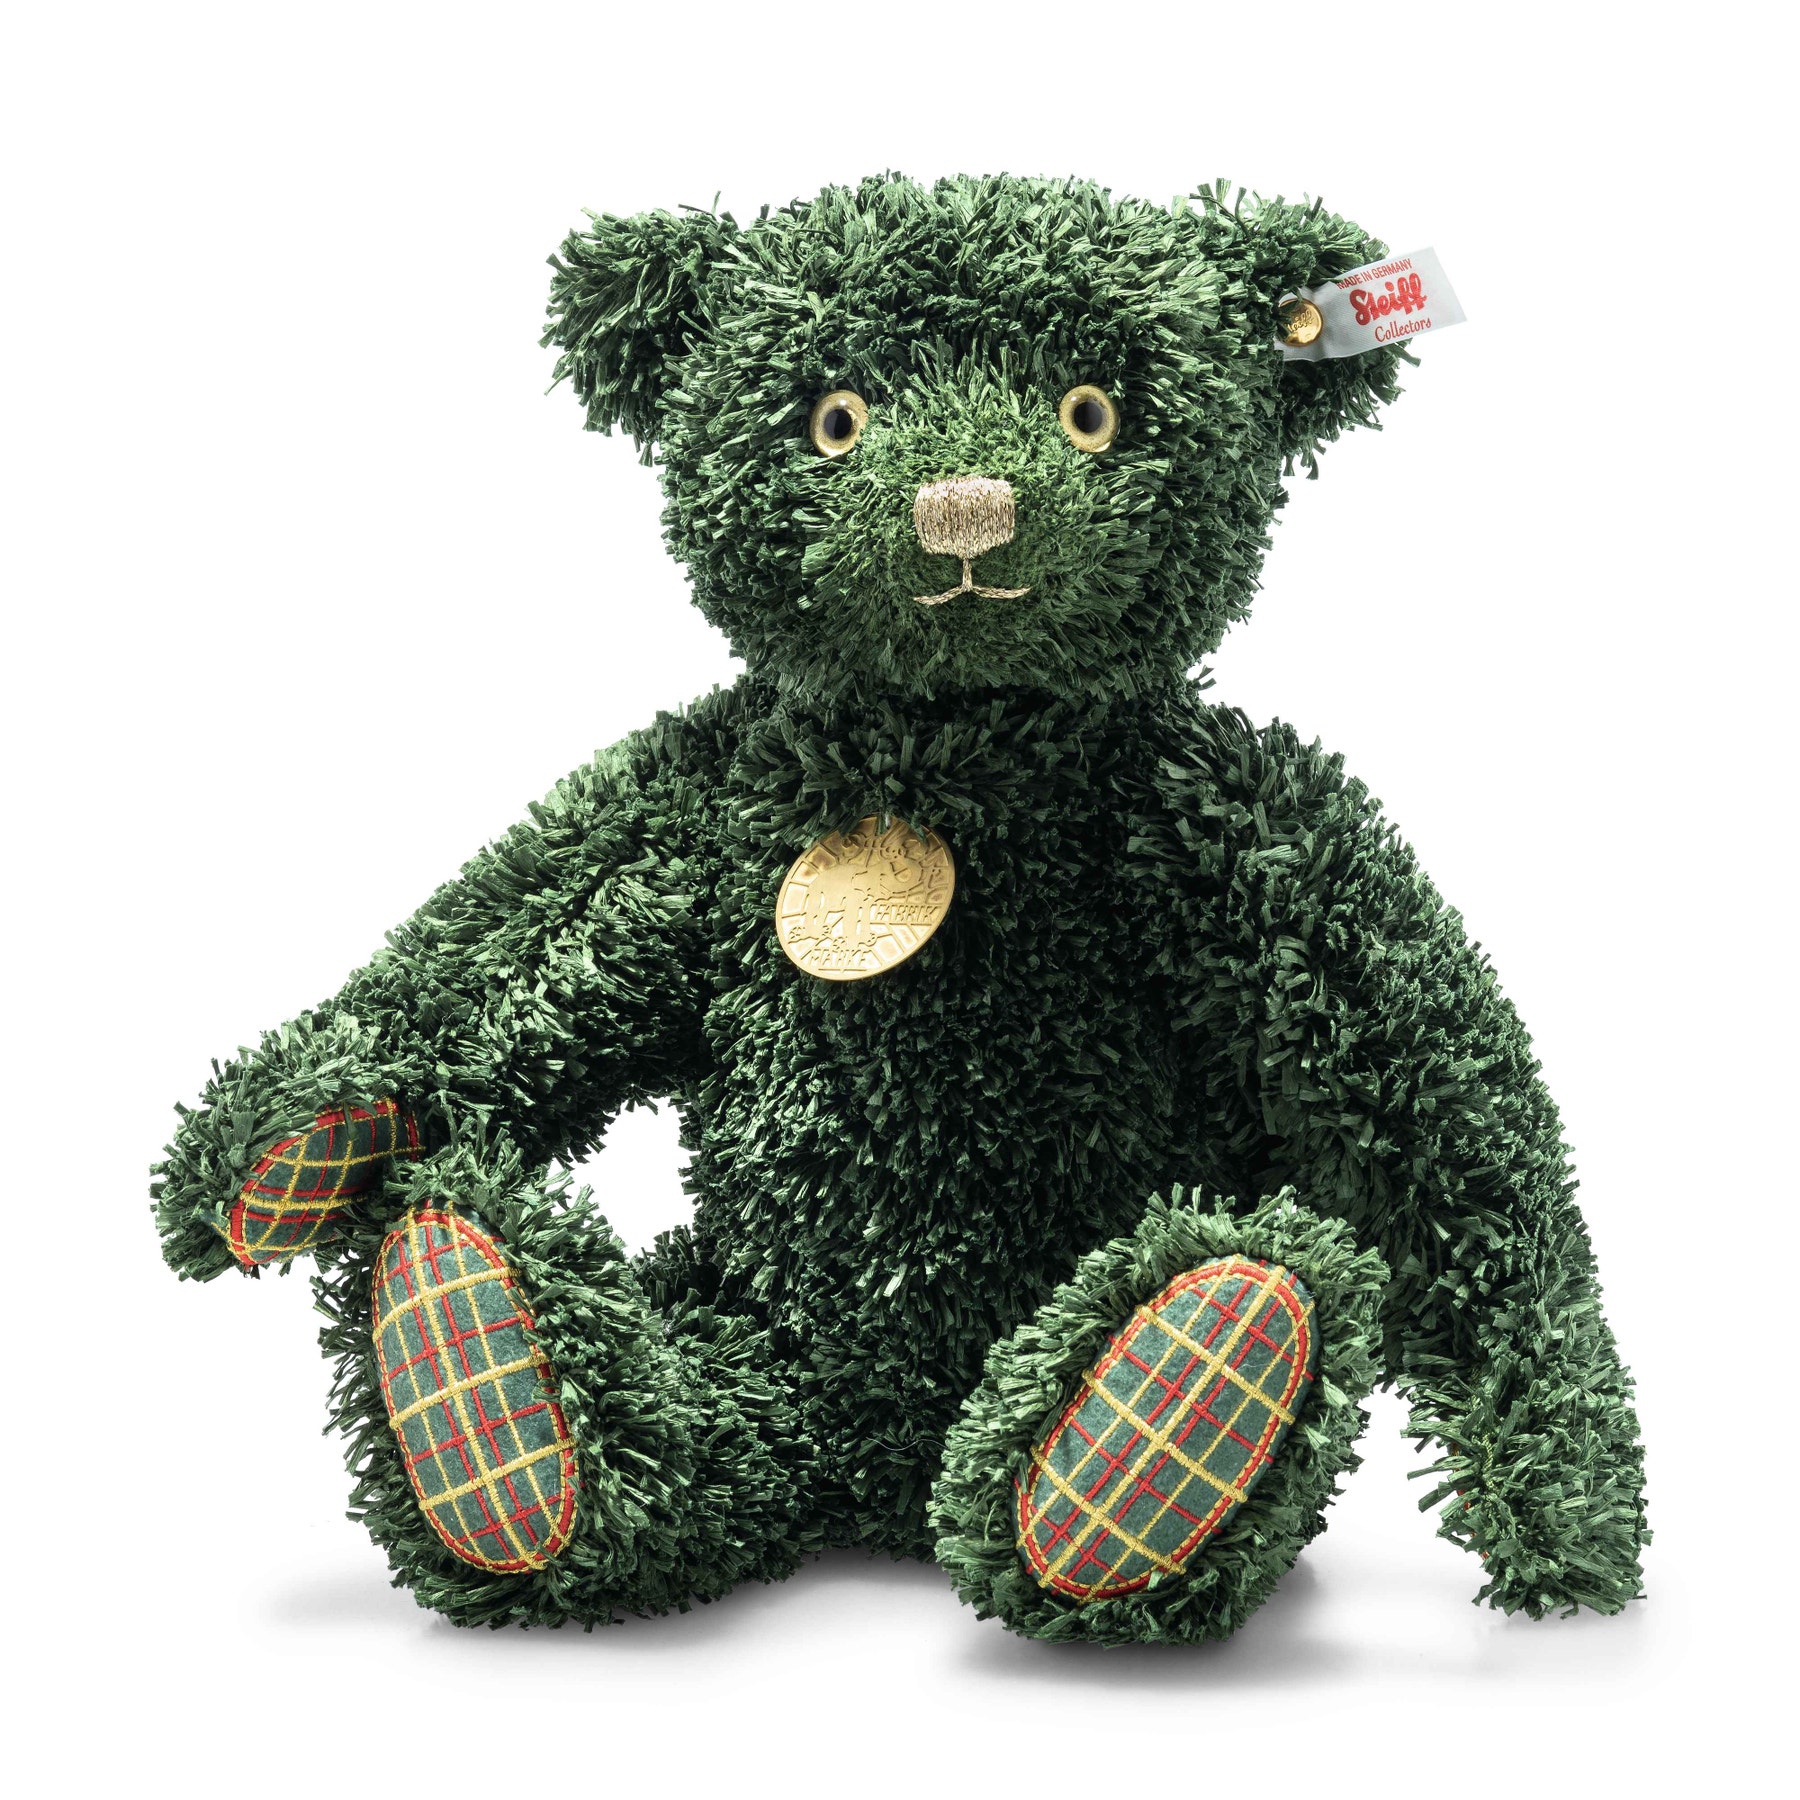 Teddies for tomorrow Green Christmas Teddy bear